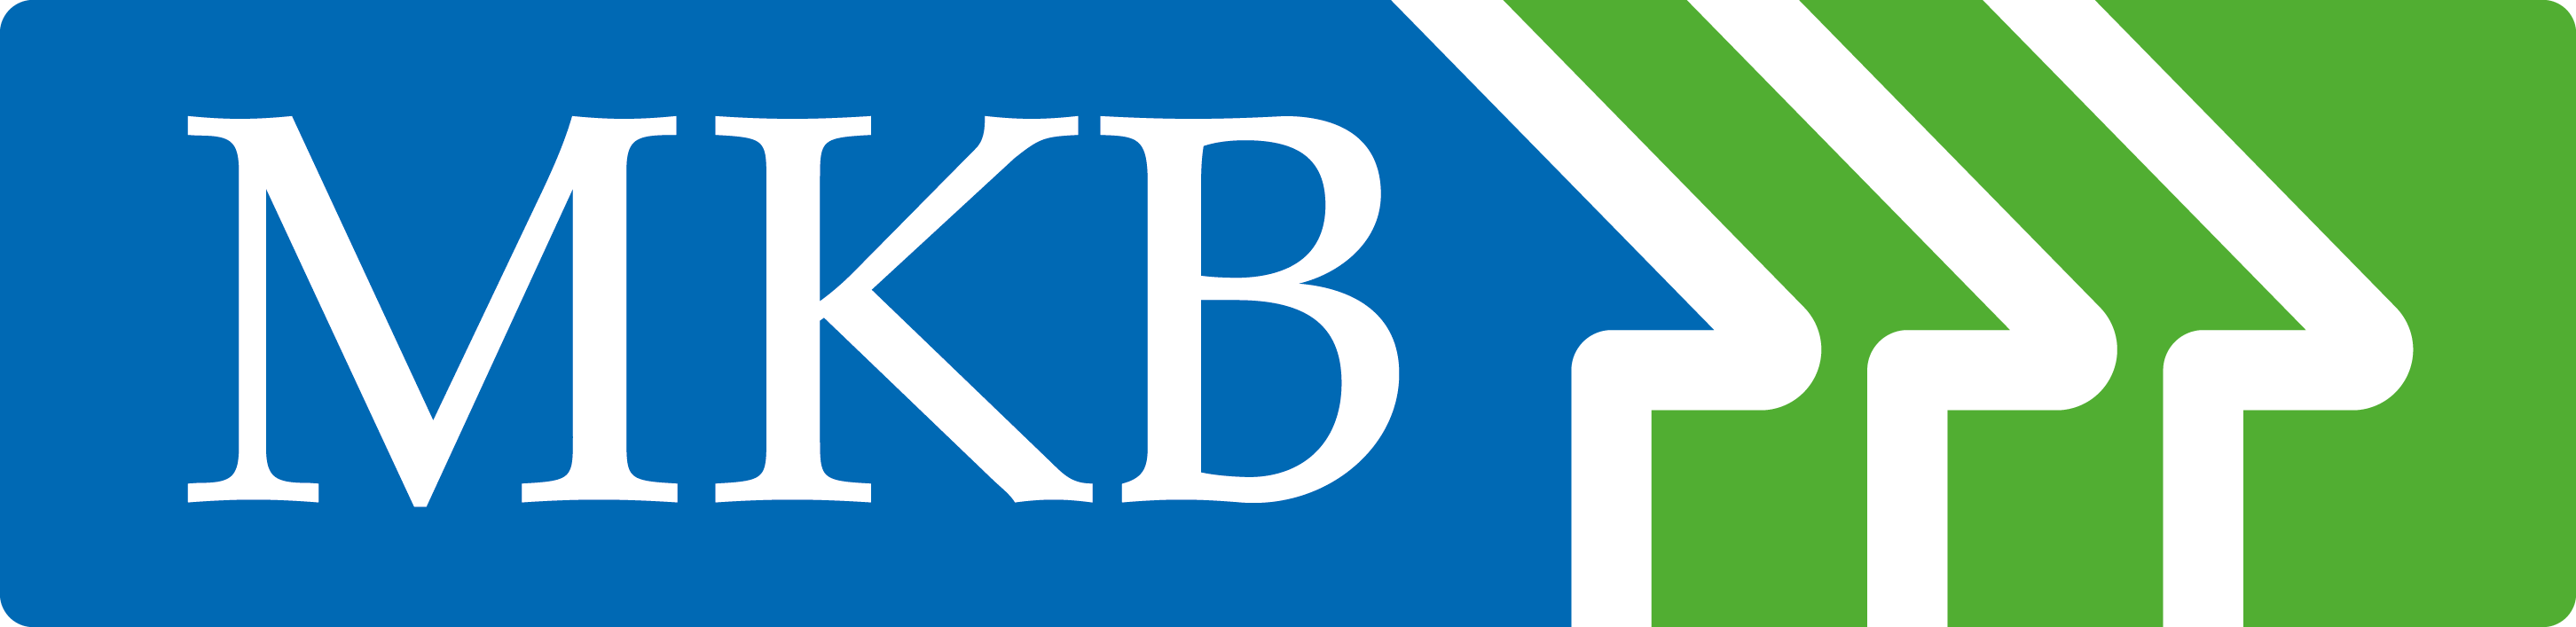 MKB_logo_BAS_cmyk